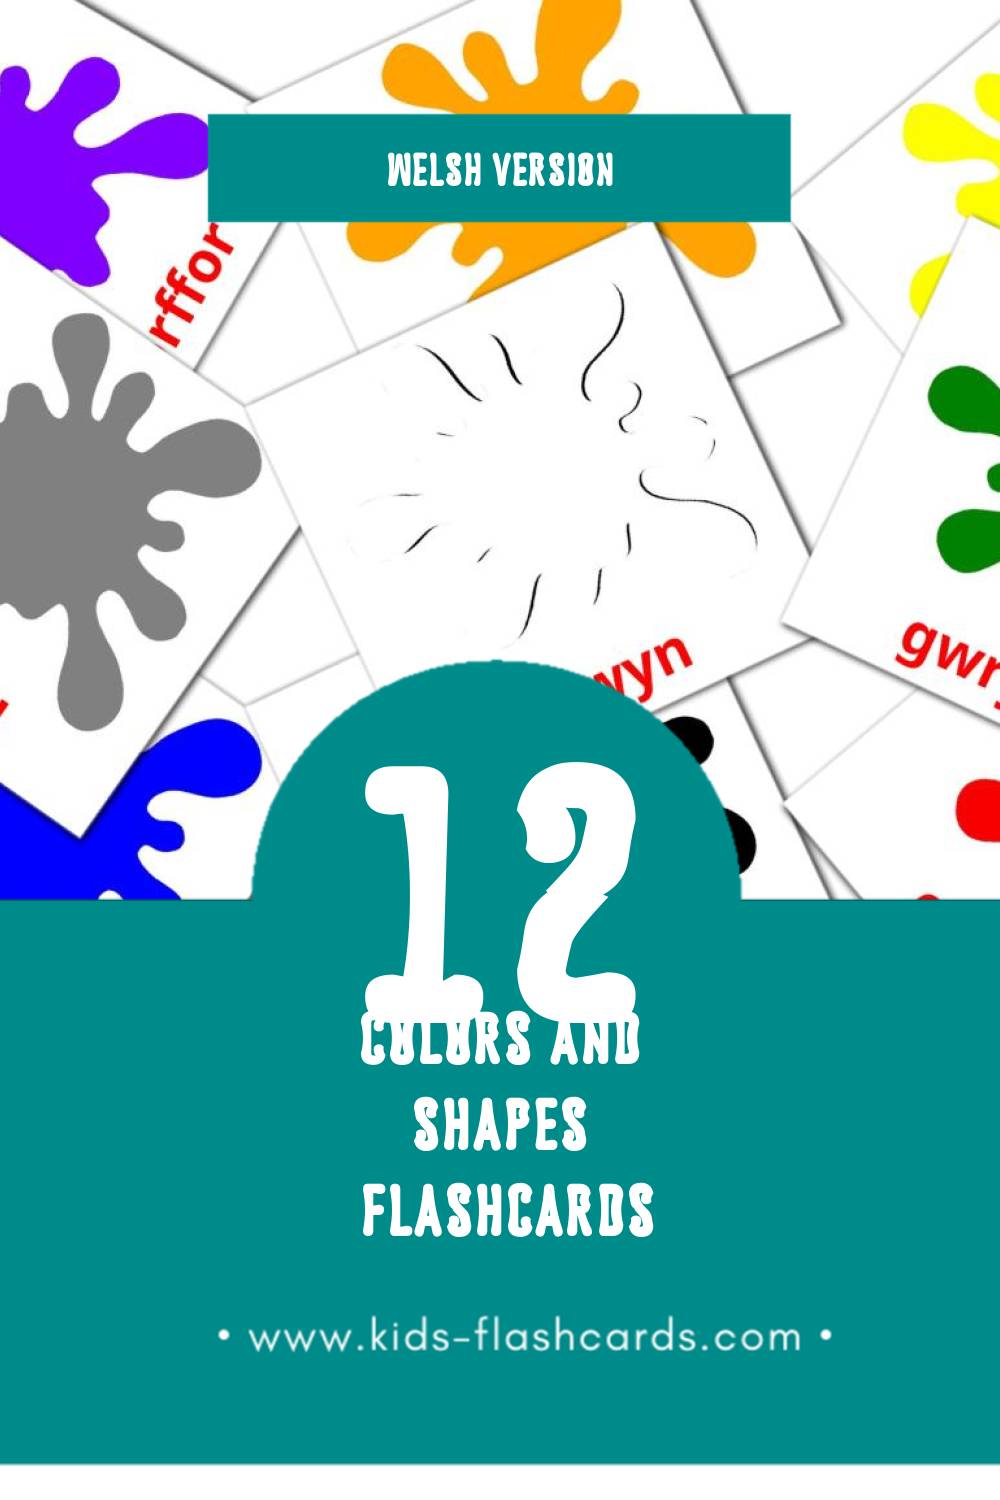 Visual Lliwiau a siapiau Flashcards for Toddlers (12 cards in Welsh)